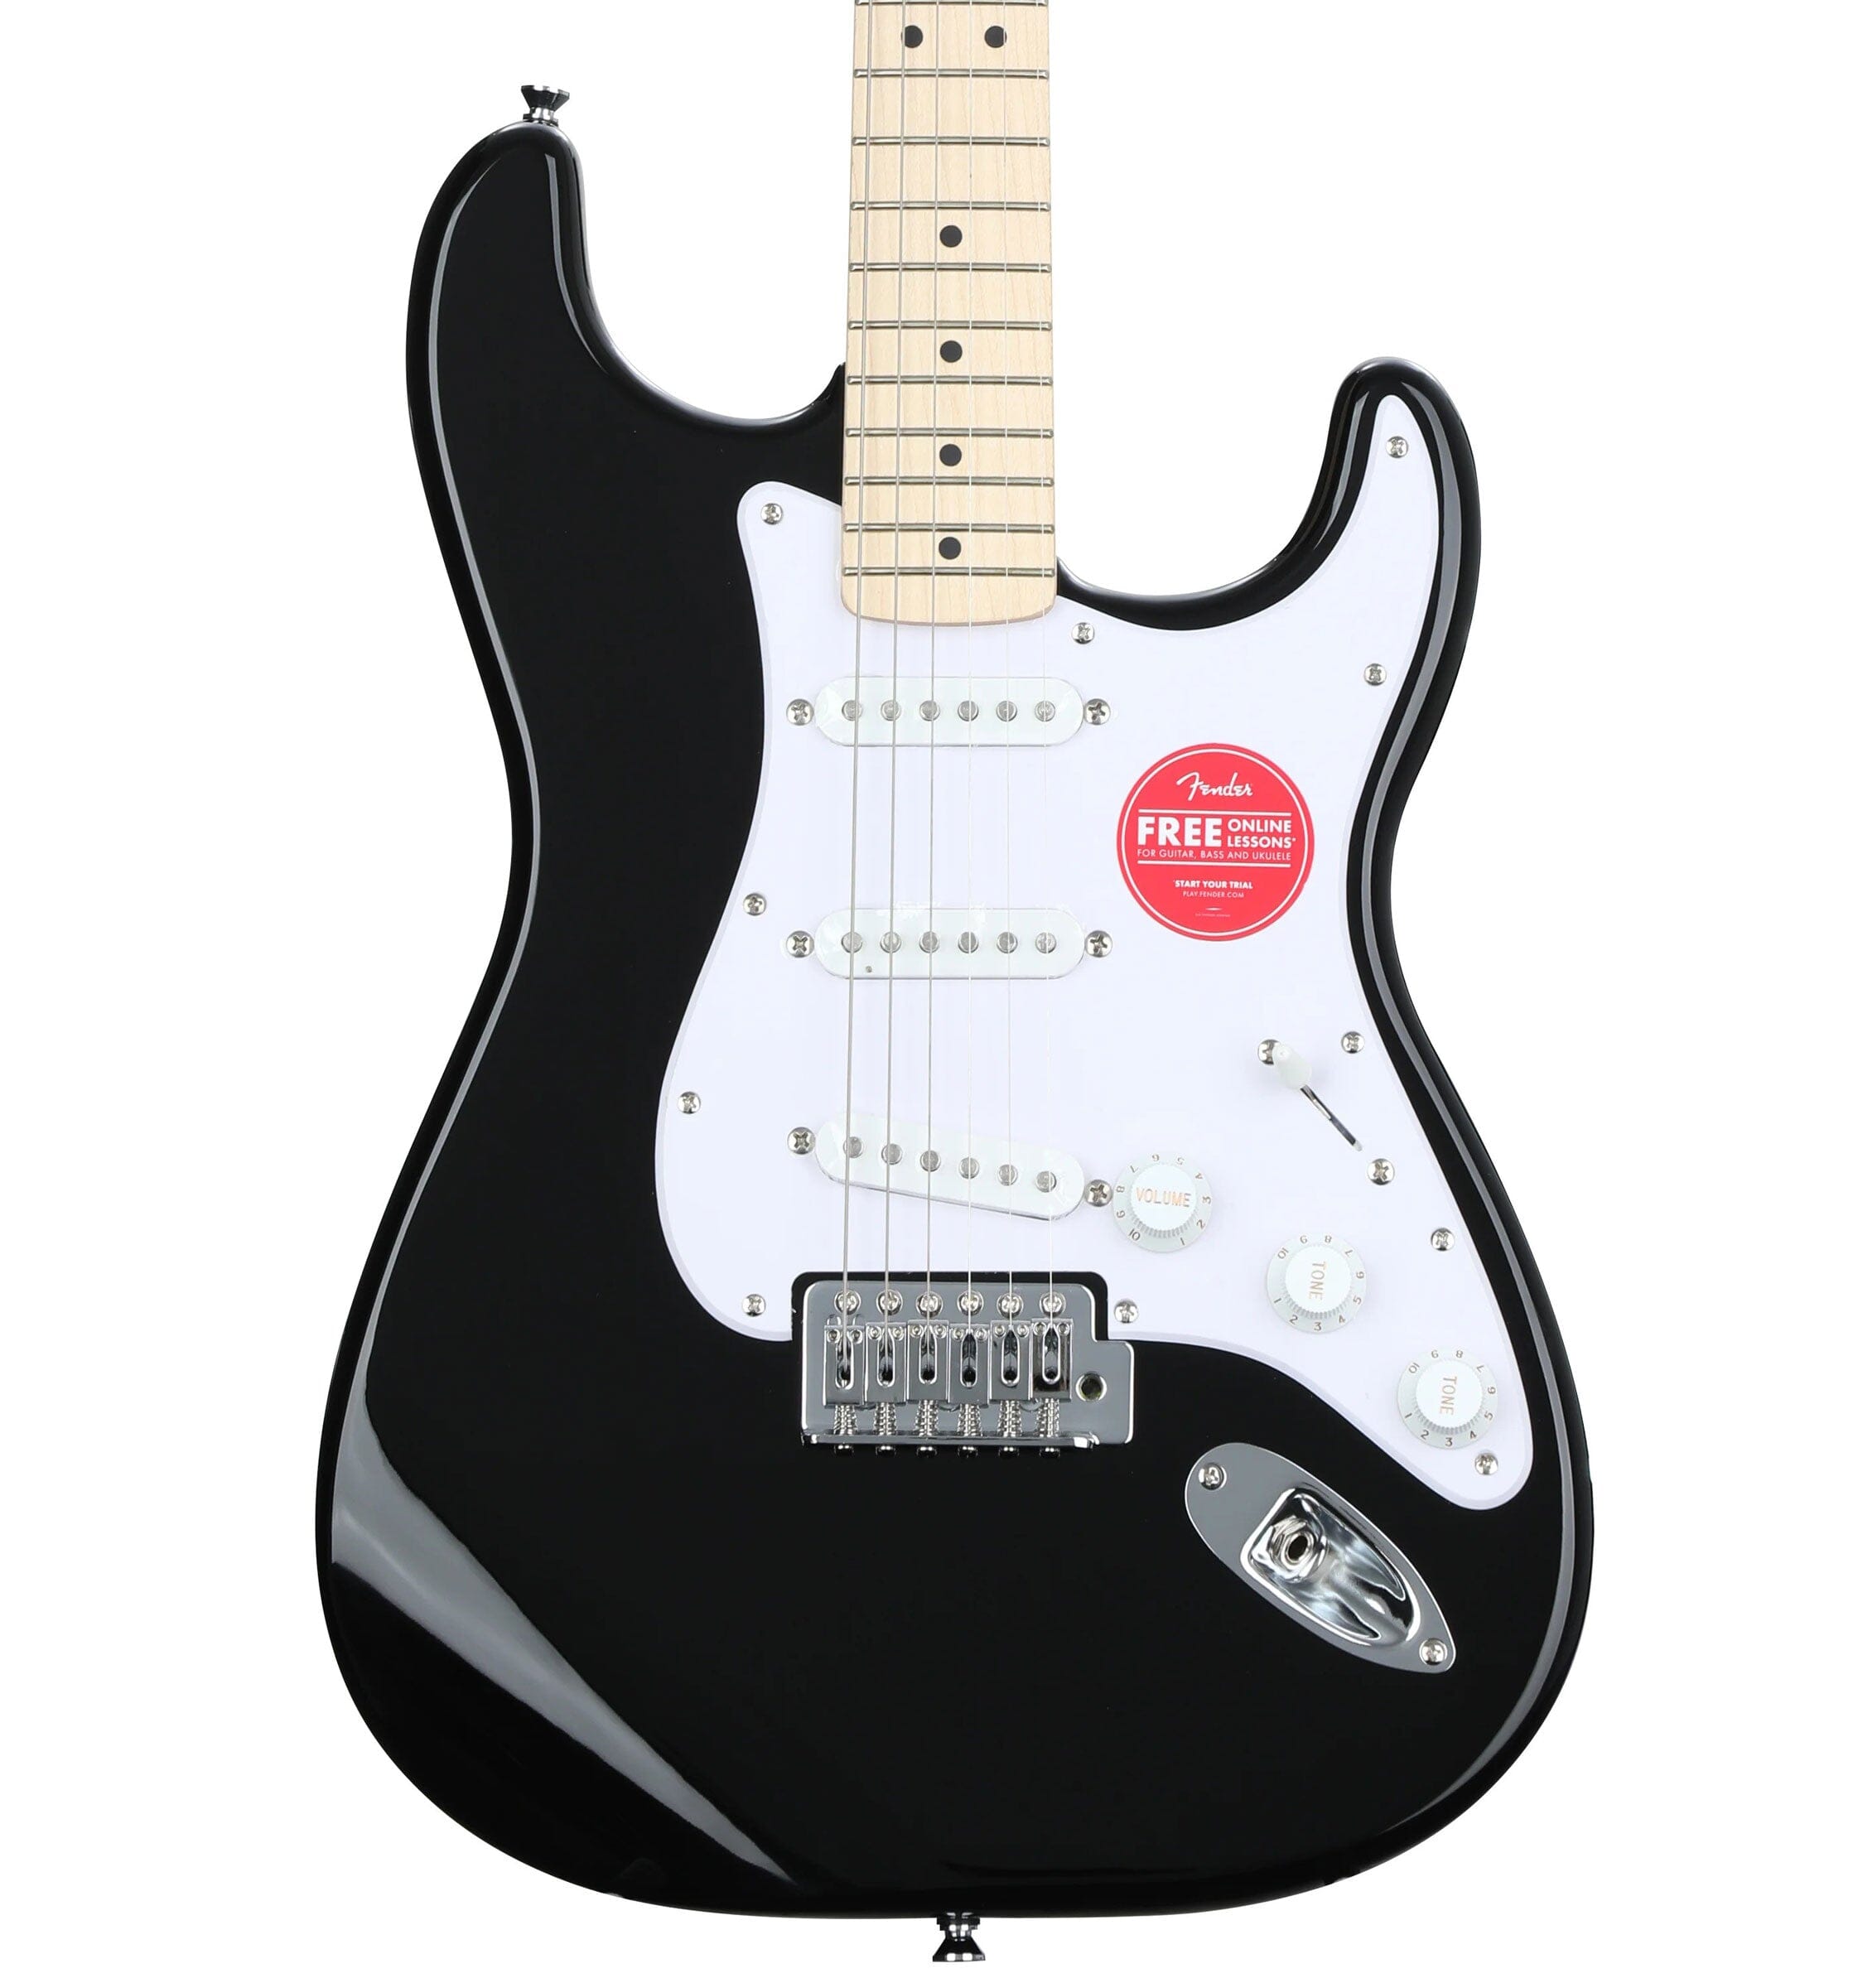 Squier Sonic Stratocaster Pack Guitarra Eléctrica + Amplificador Frontman 10G Guitarras Eléctricas Squier 